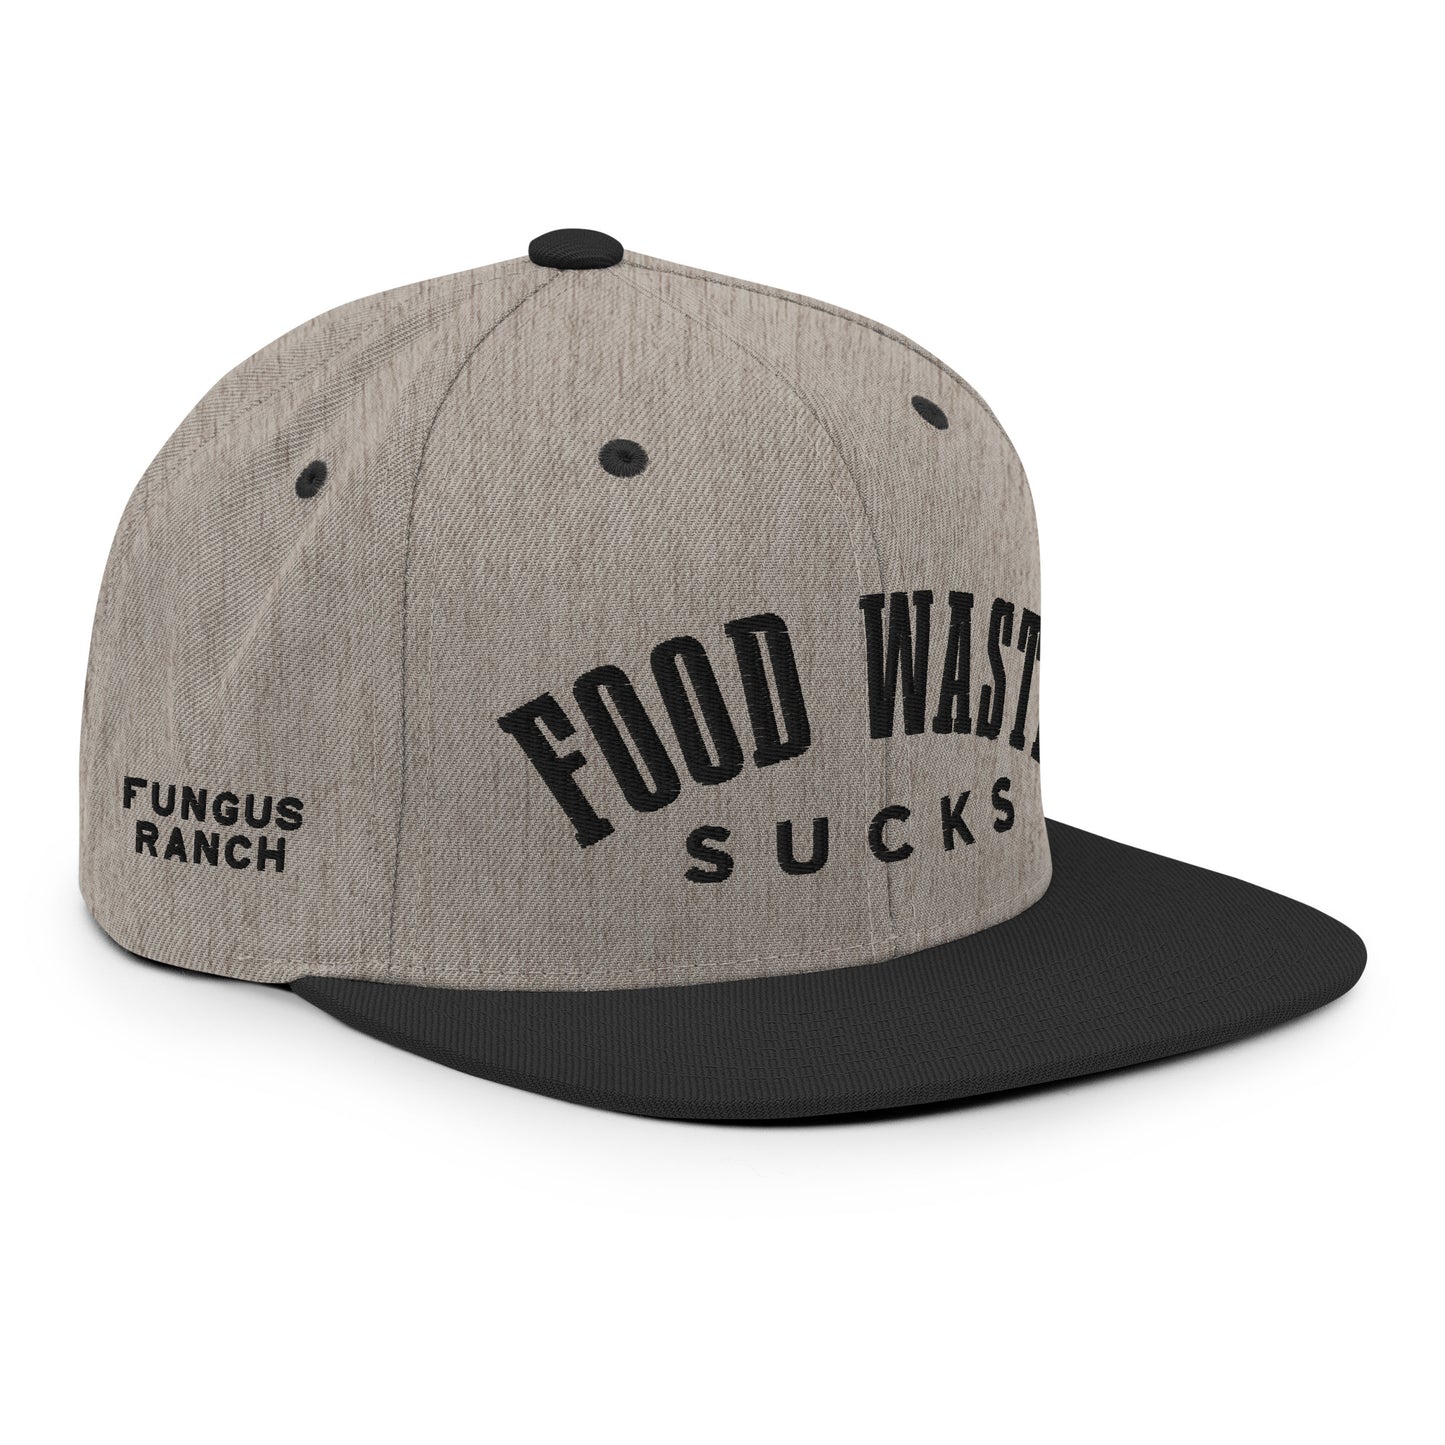 Food Waste Sucks Heather Grey/Black Snapback Hat